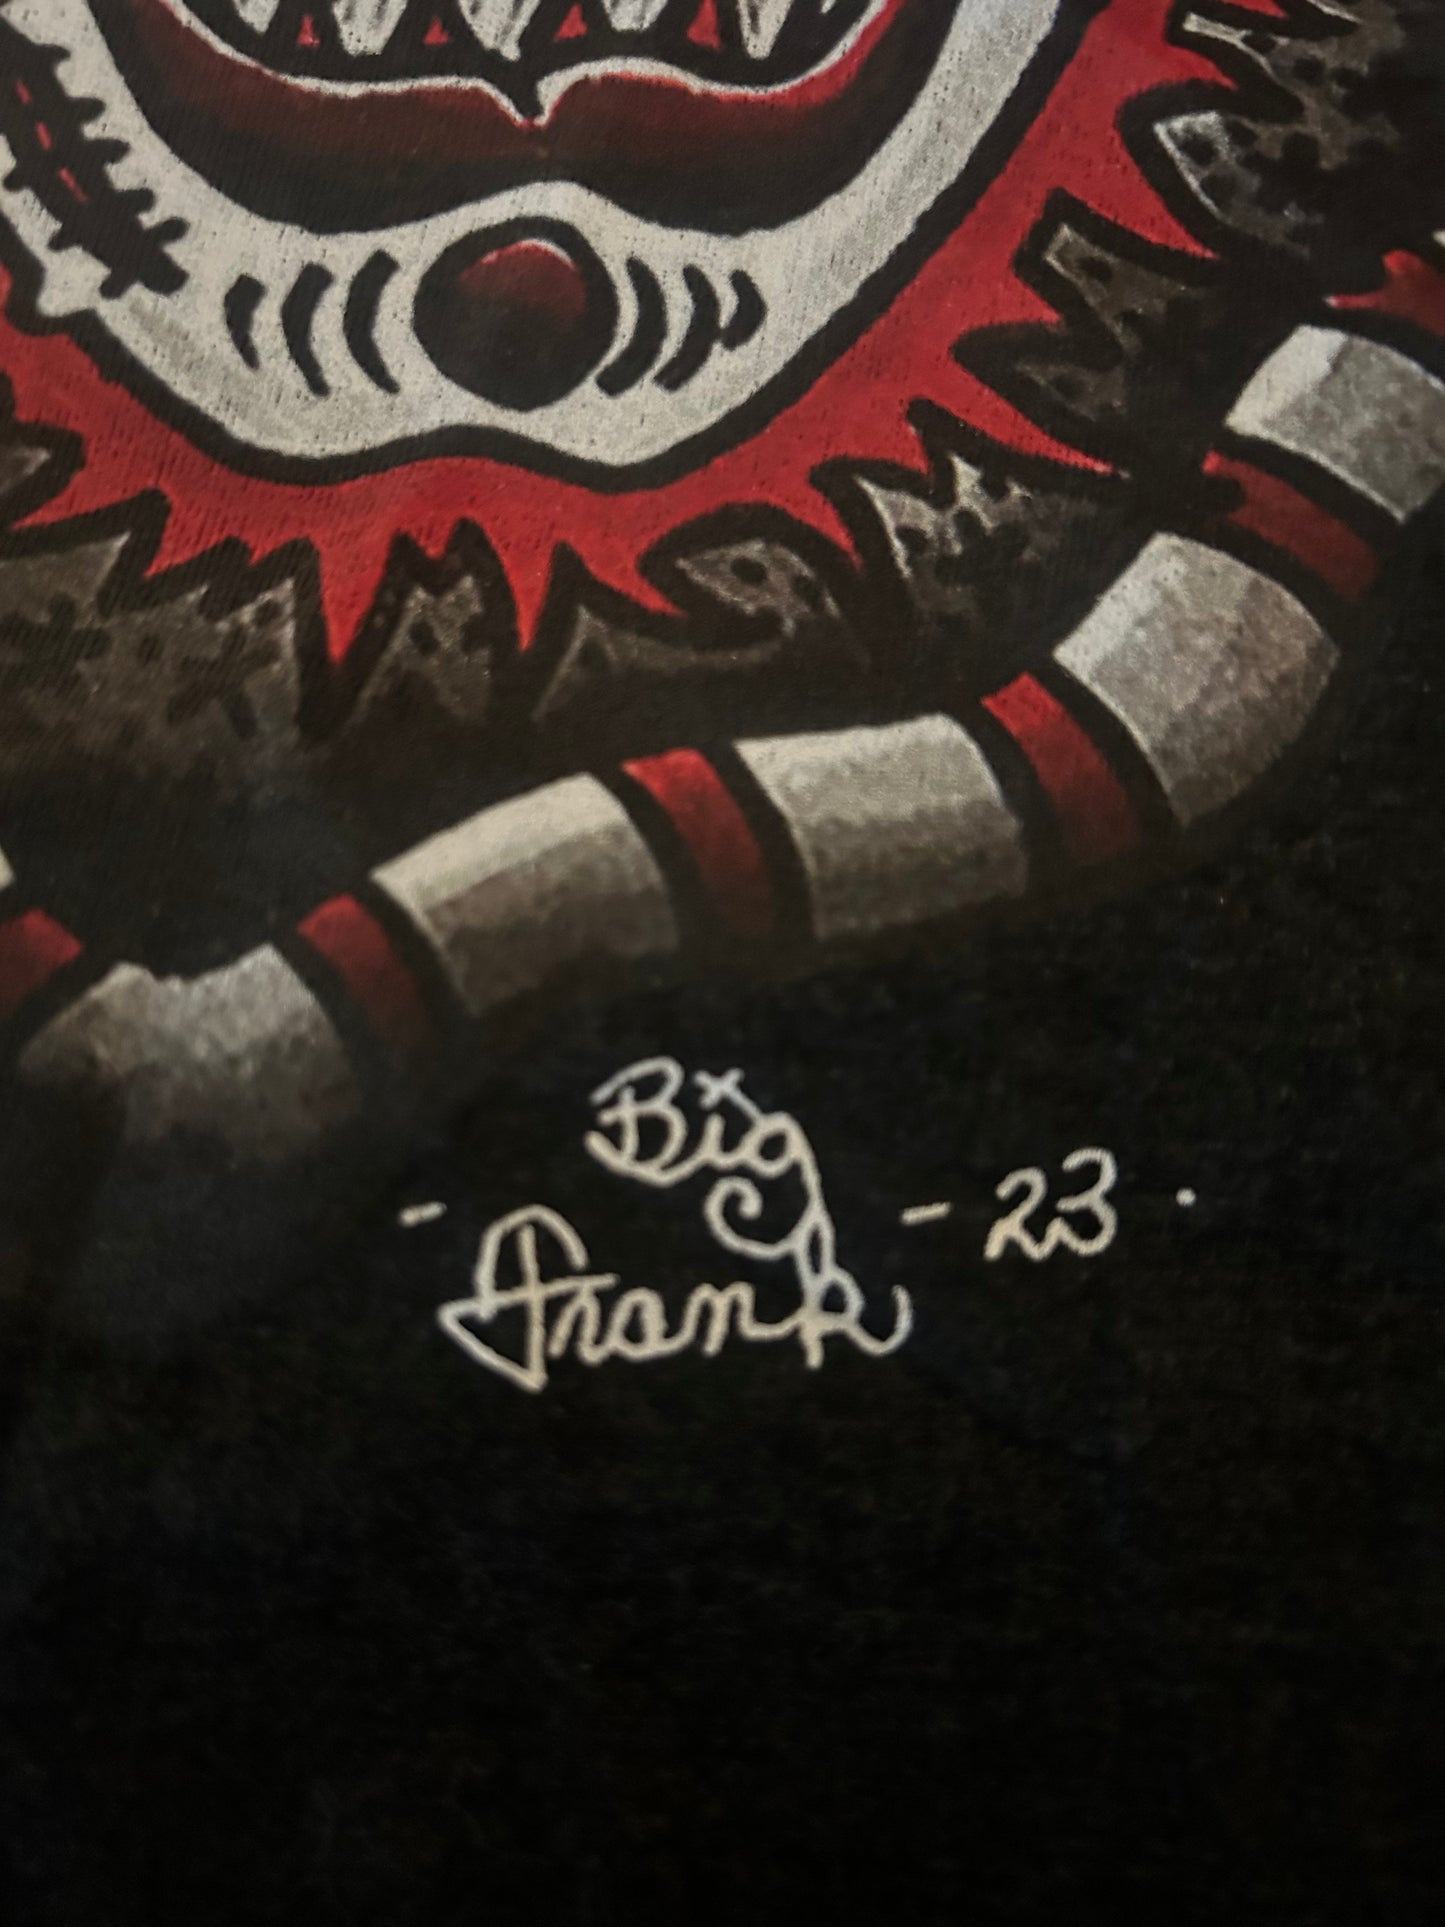 AJ Ransdell "Das Klown" Tee by Big Frank